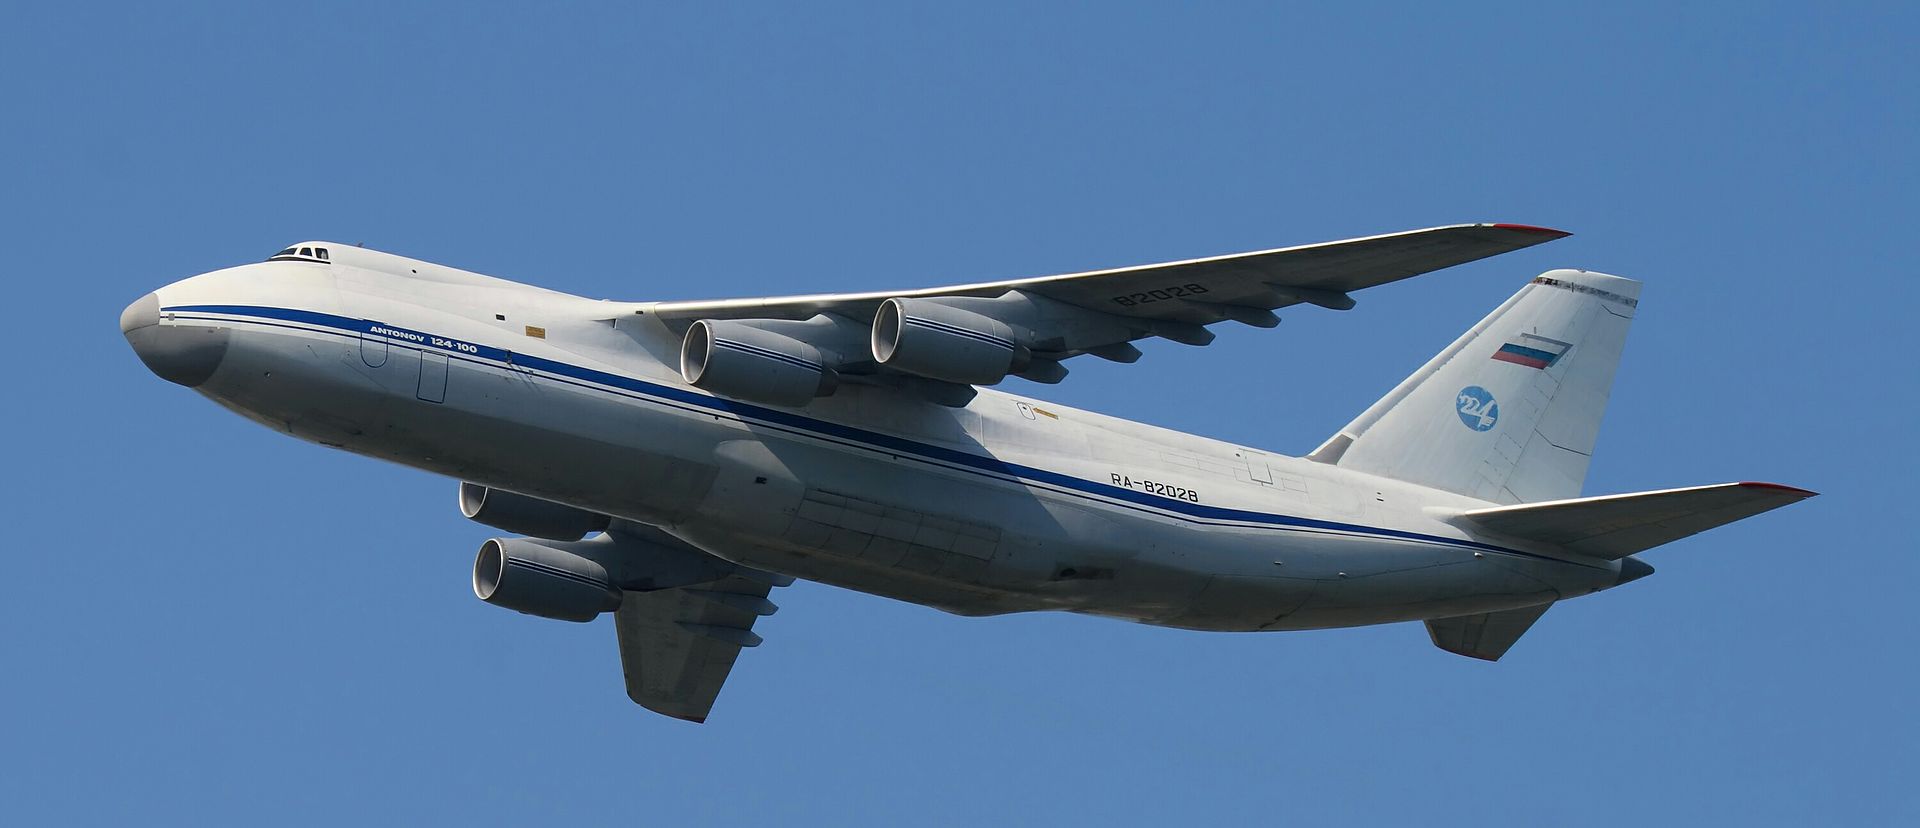 1920px-An-124_RA-82028_09-May-2010.JPG